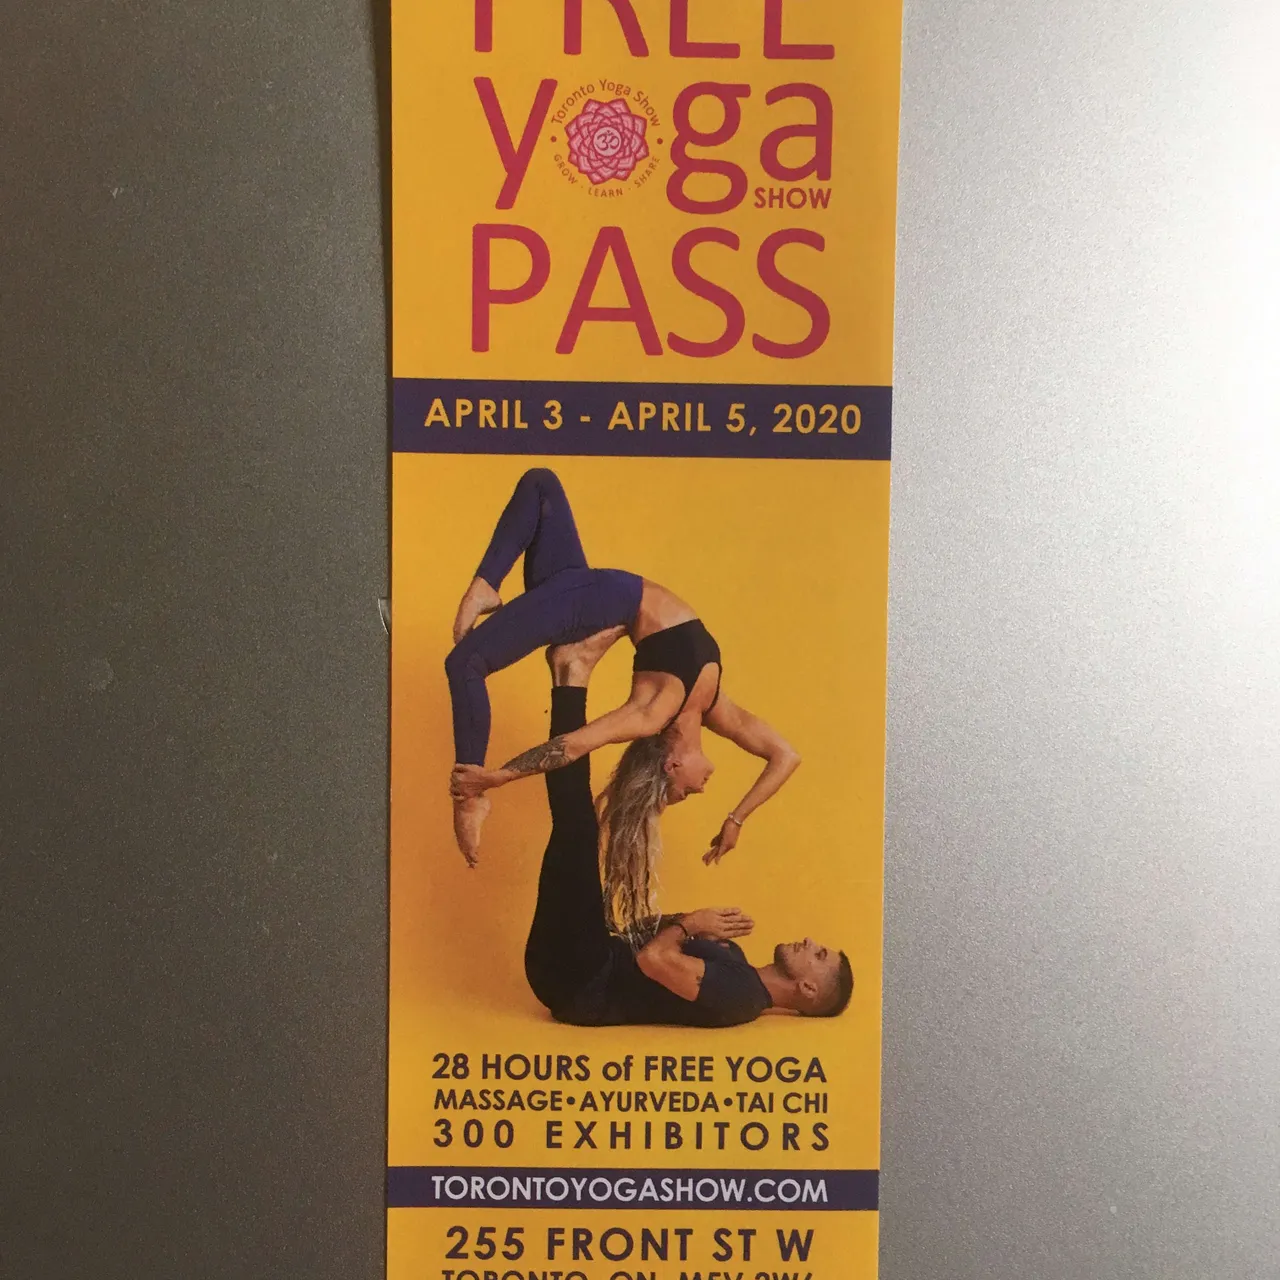 Yoga Show Pass photo 1